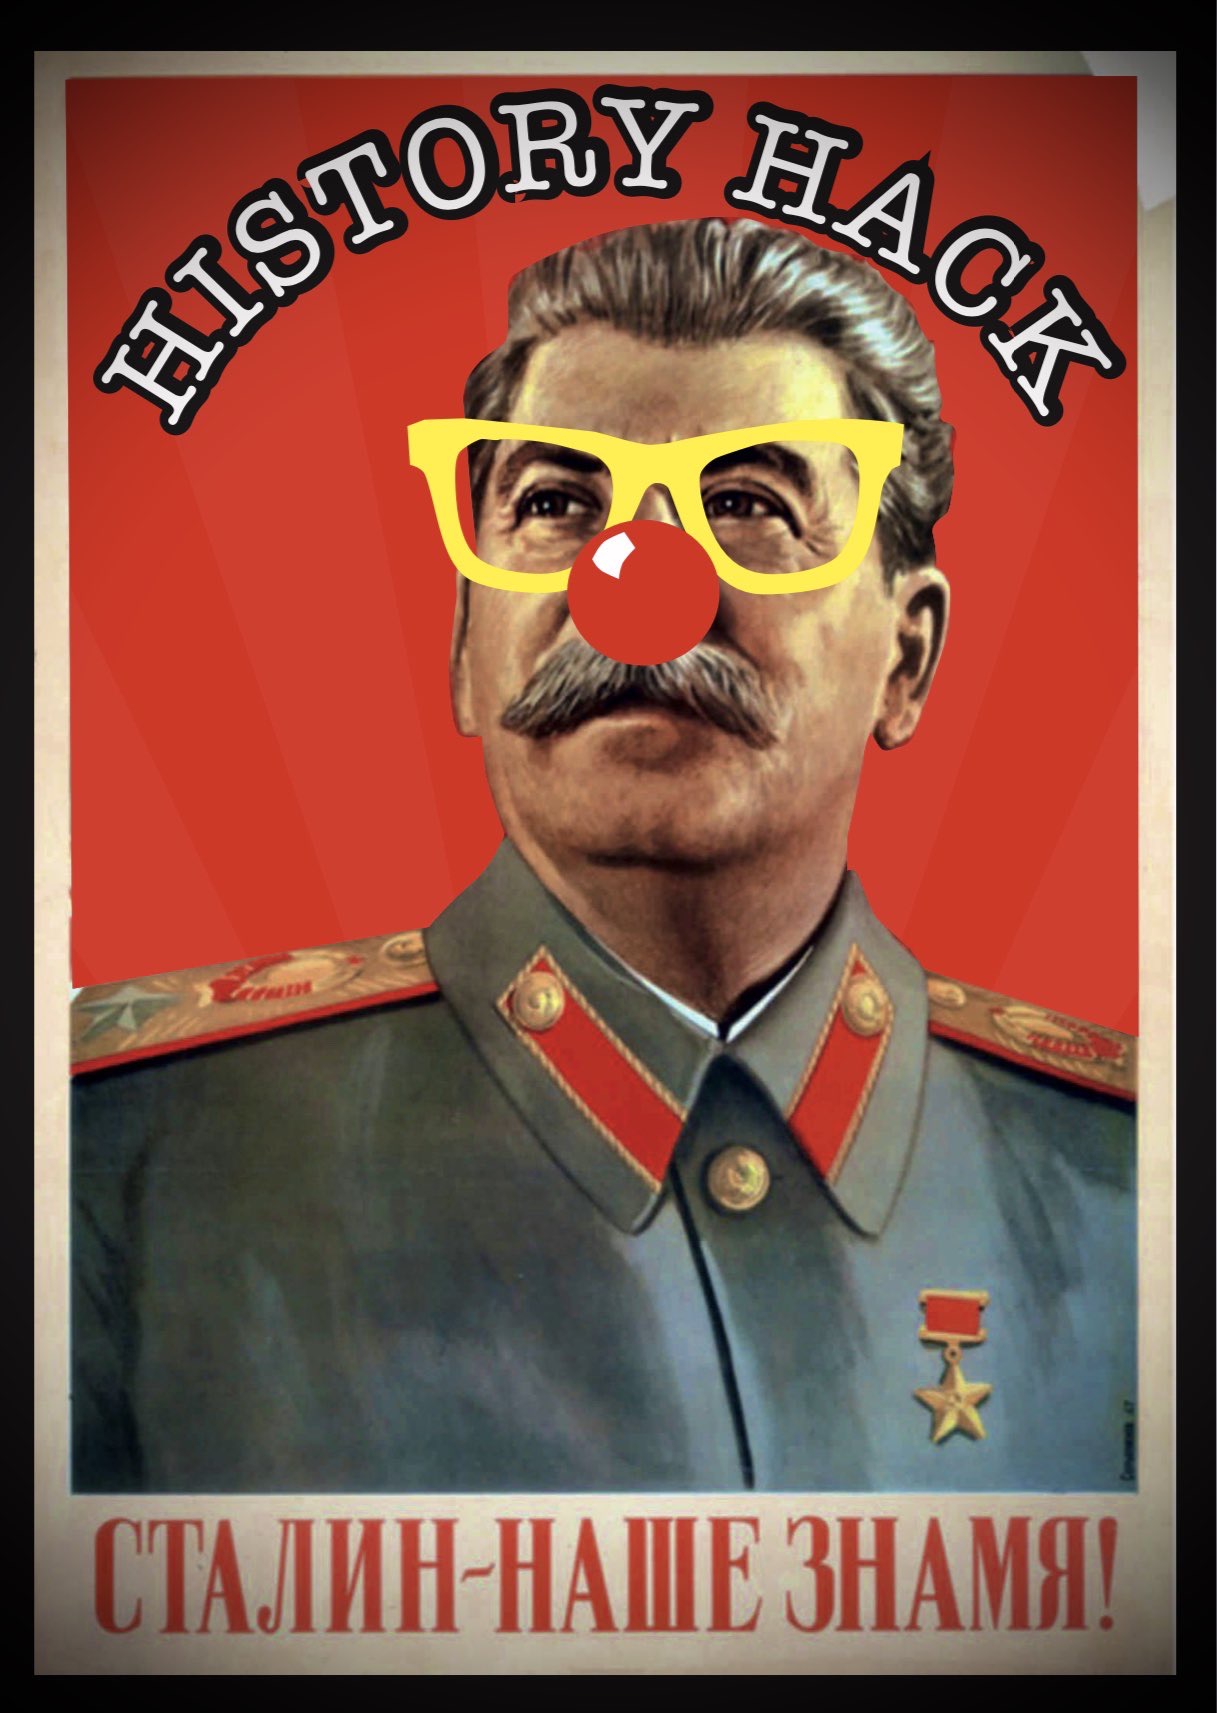 #215 History Hack: Humour Under Stalin